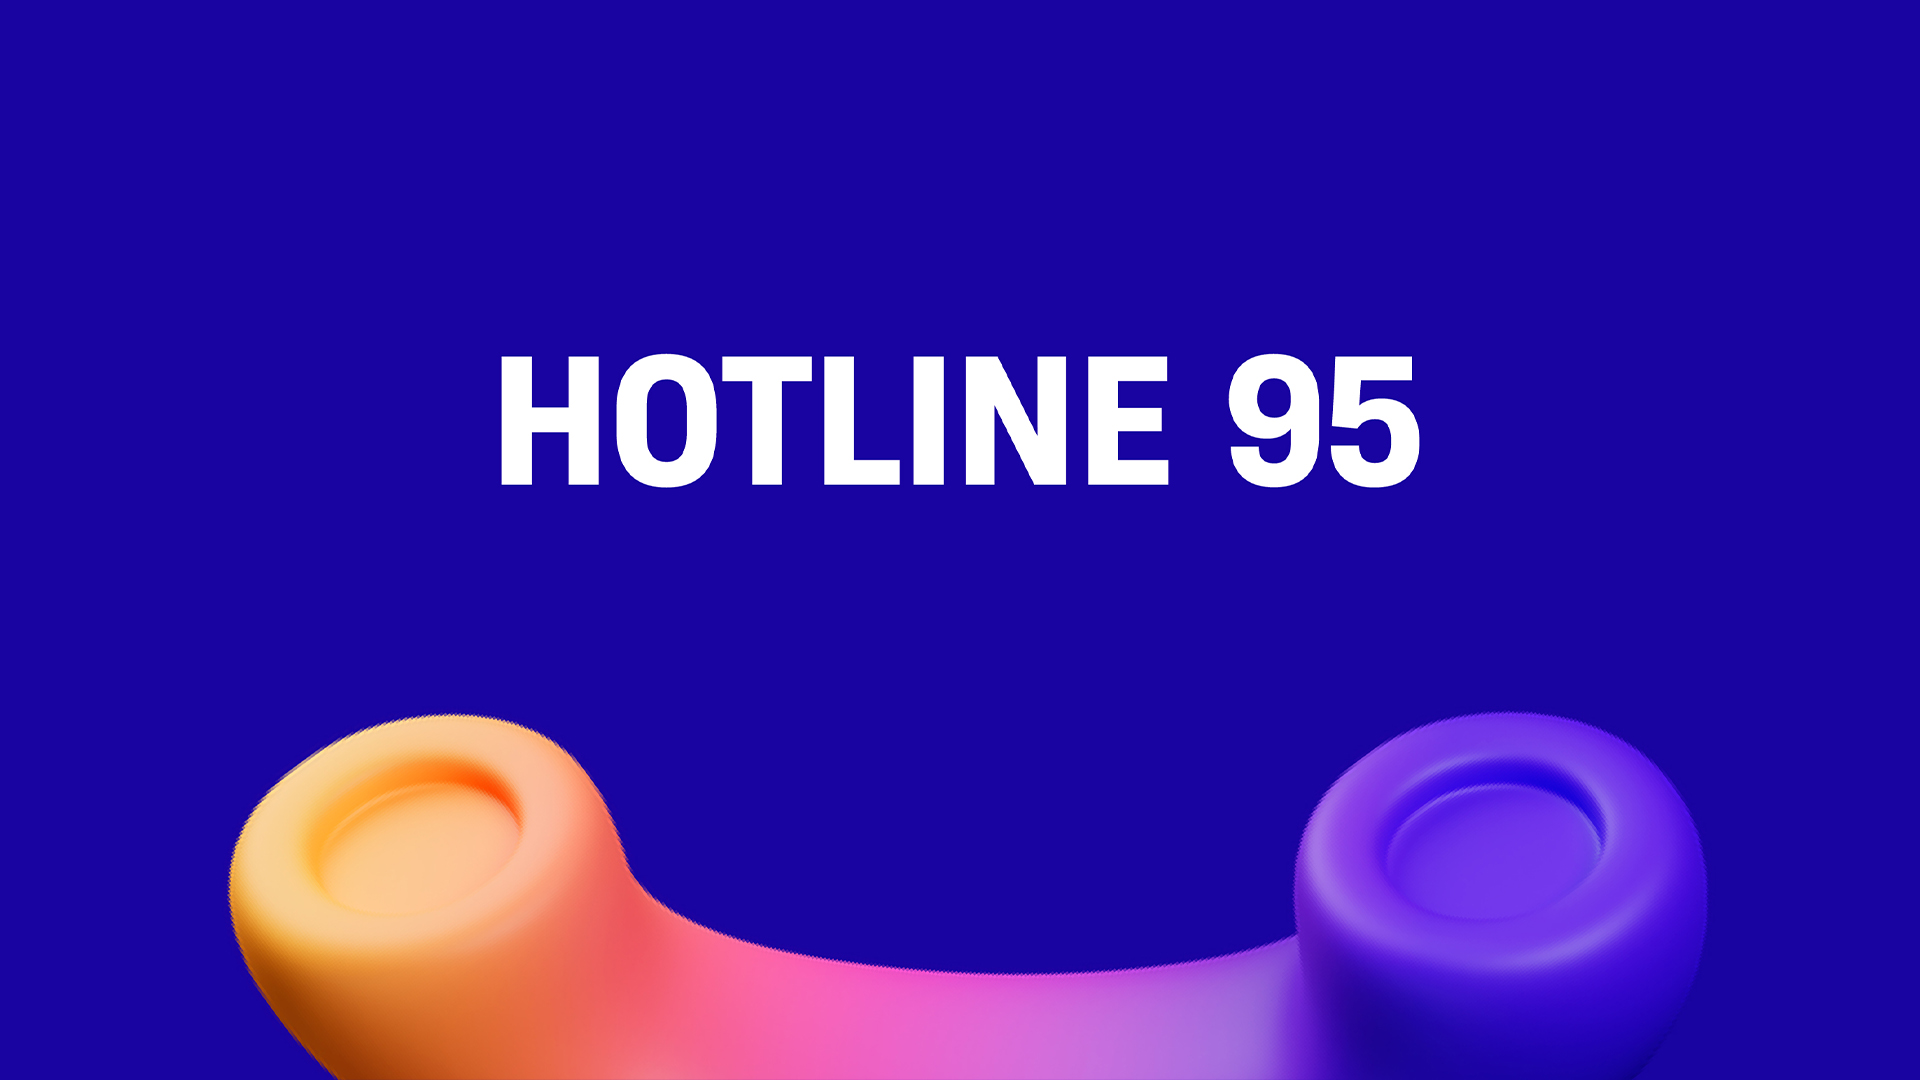 Hotline 95